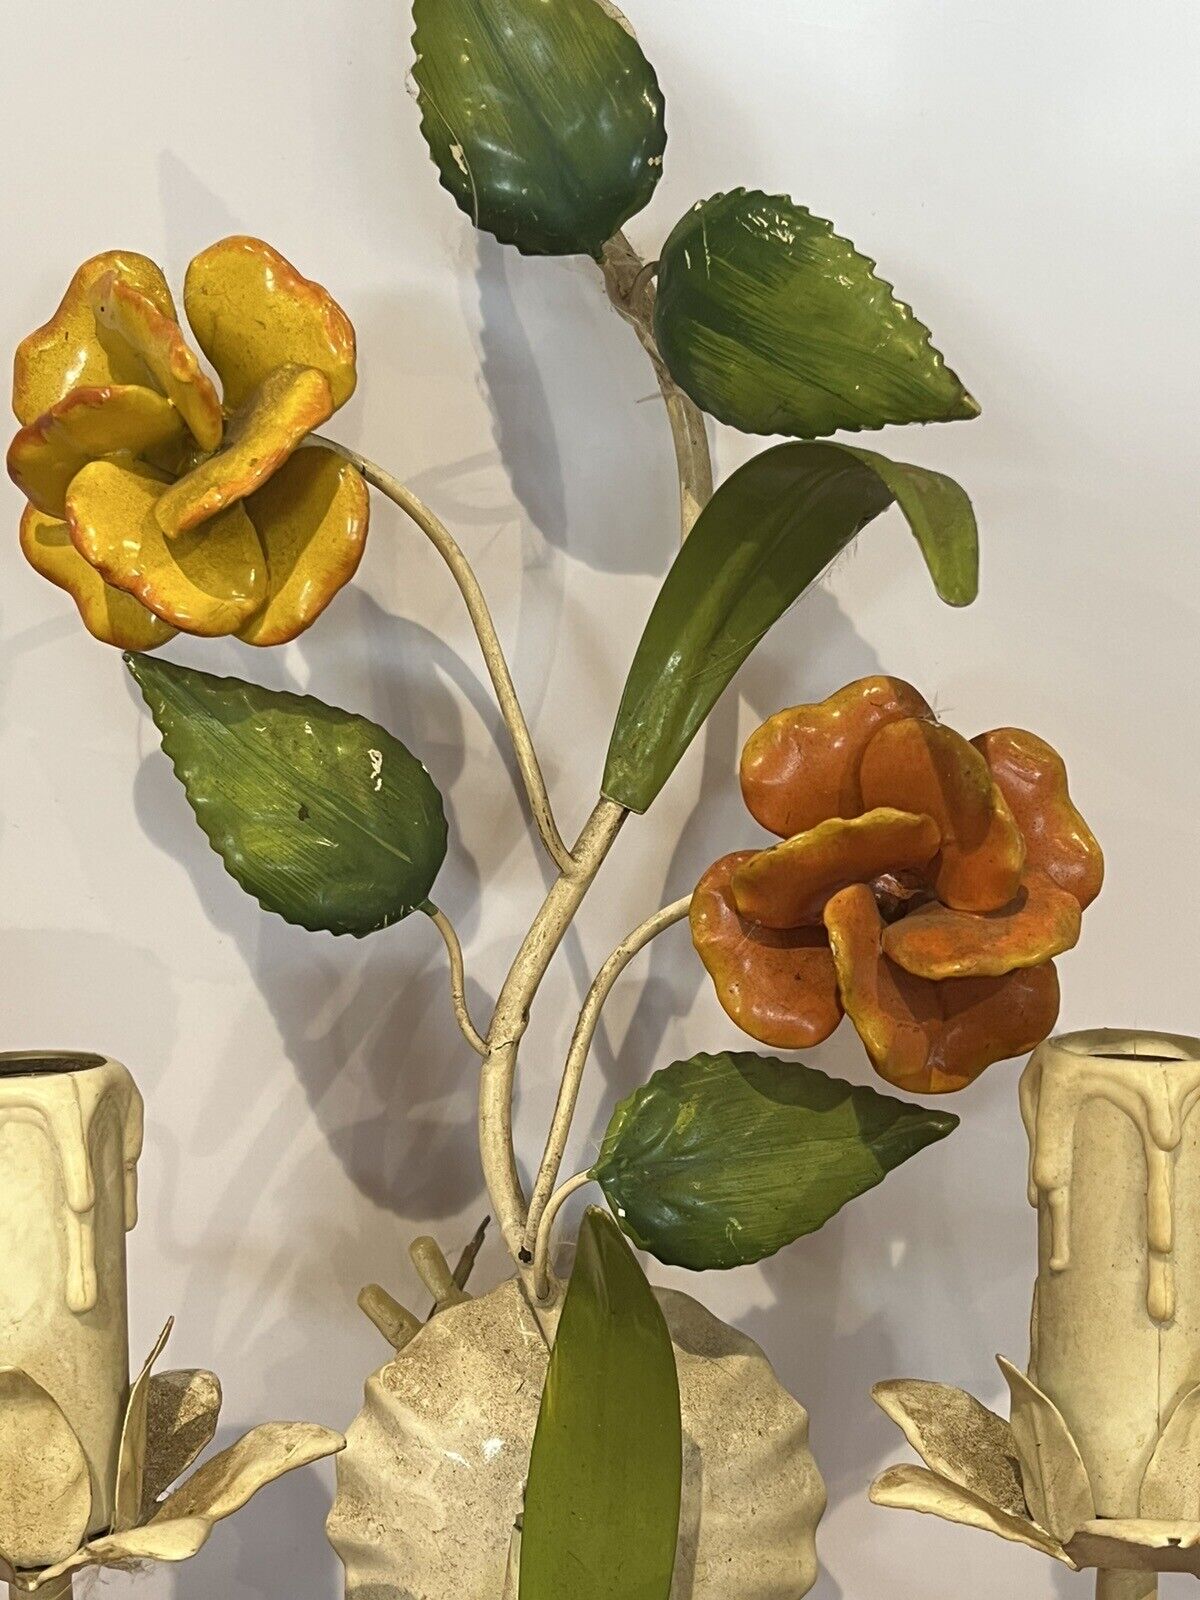 Wall Light. Original Mid Century Italian Toleware Metal Painted Flowers